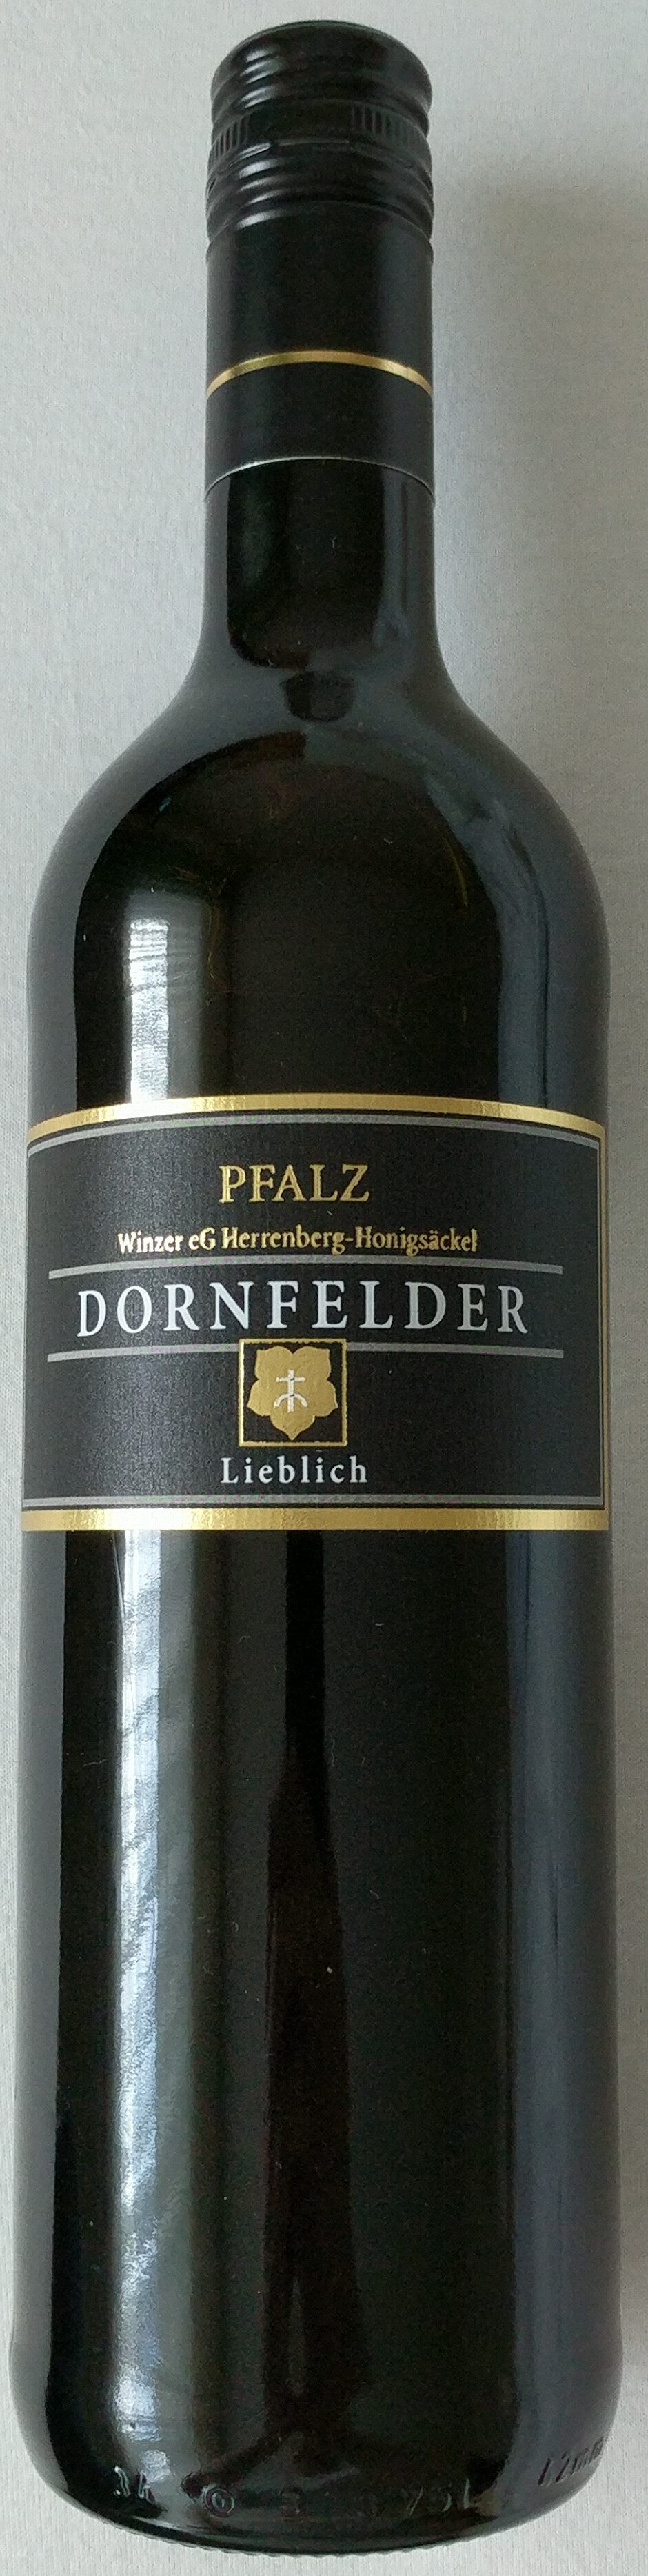 Dornfelder Lieblich / Pfalz, 2019 - Product - de